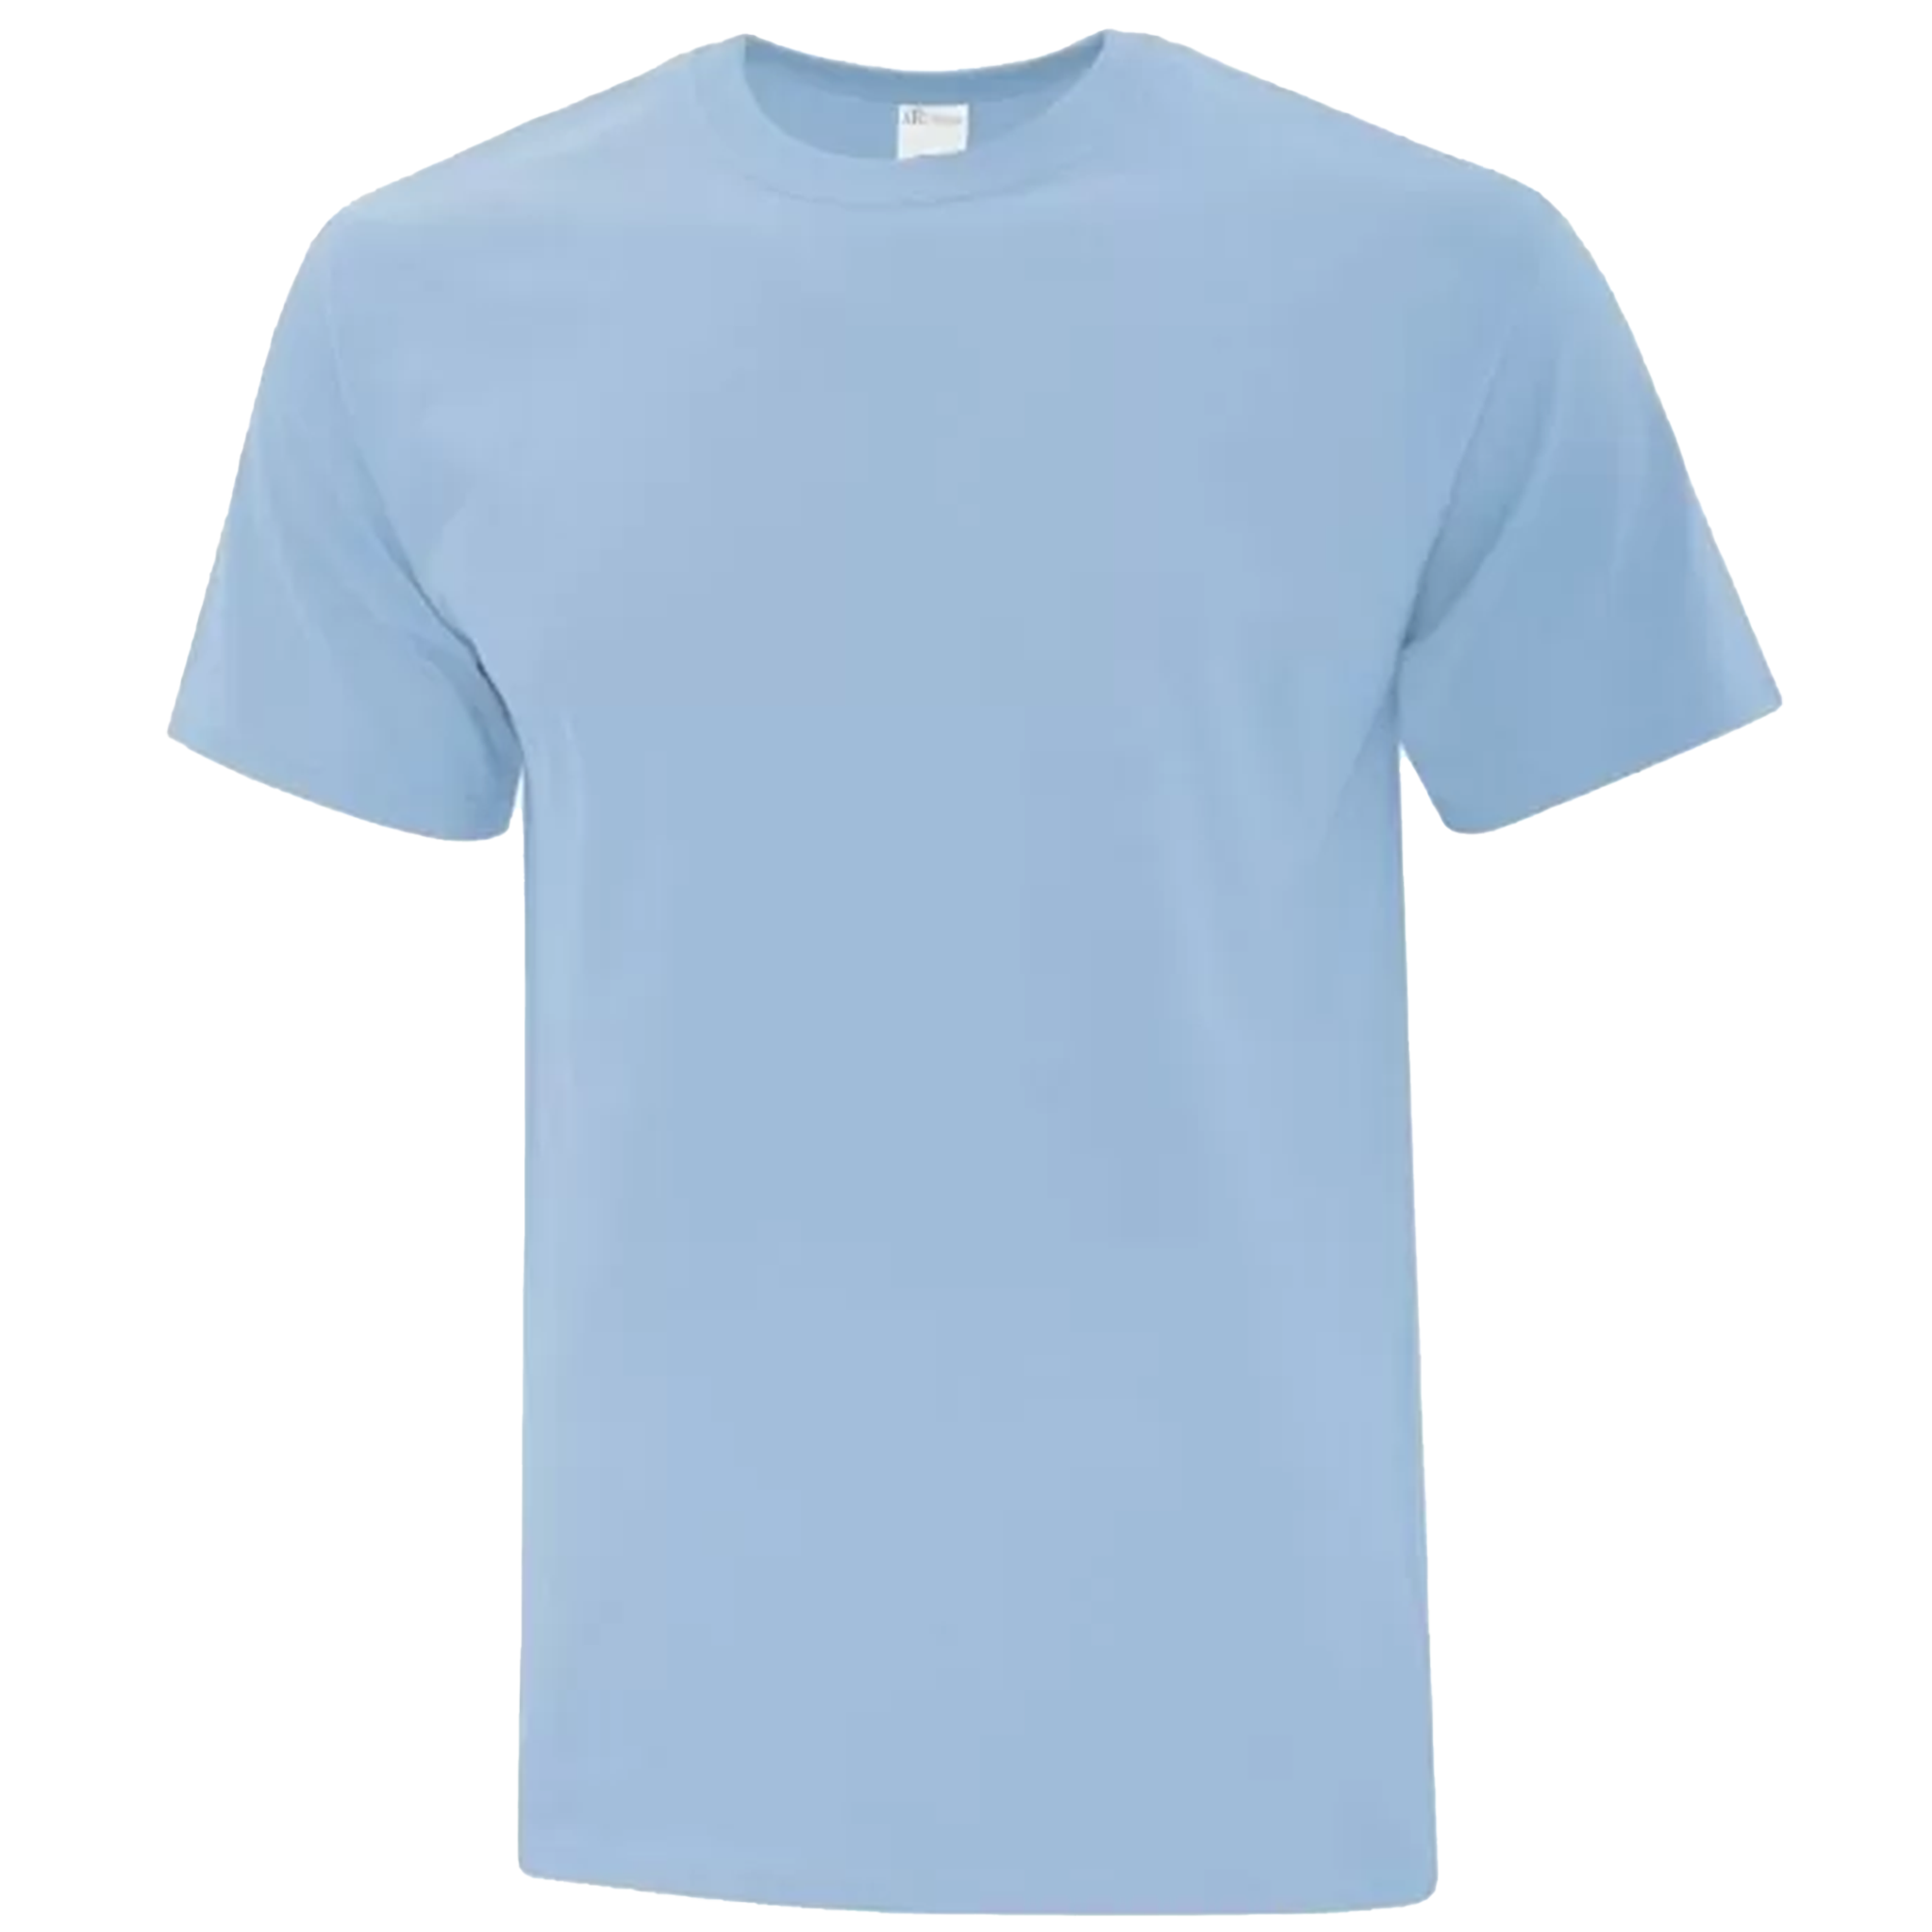 ATC Everyday Cotton T-Shirt - Men's Sizing S-4XL - Light Blue